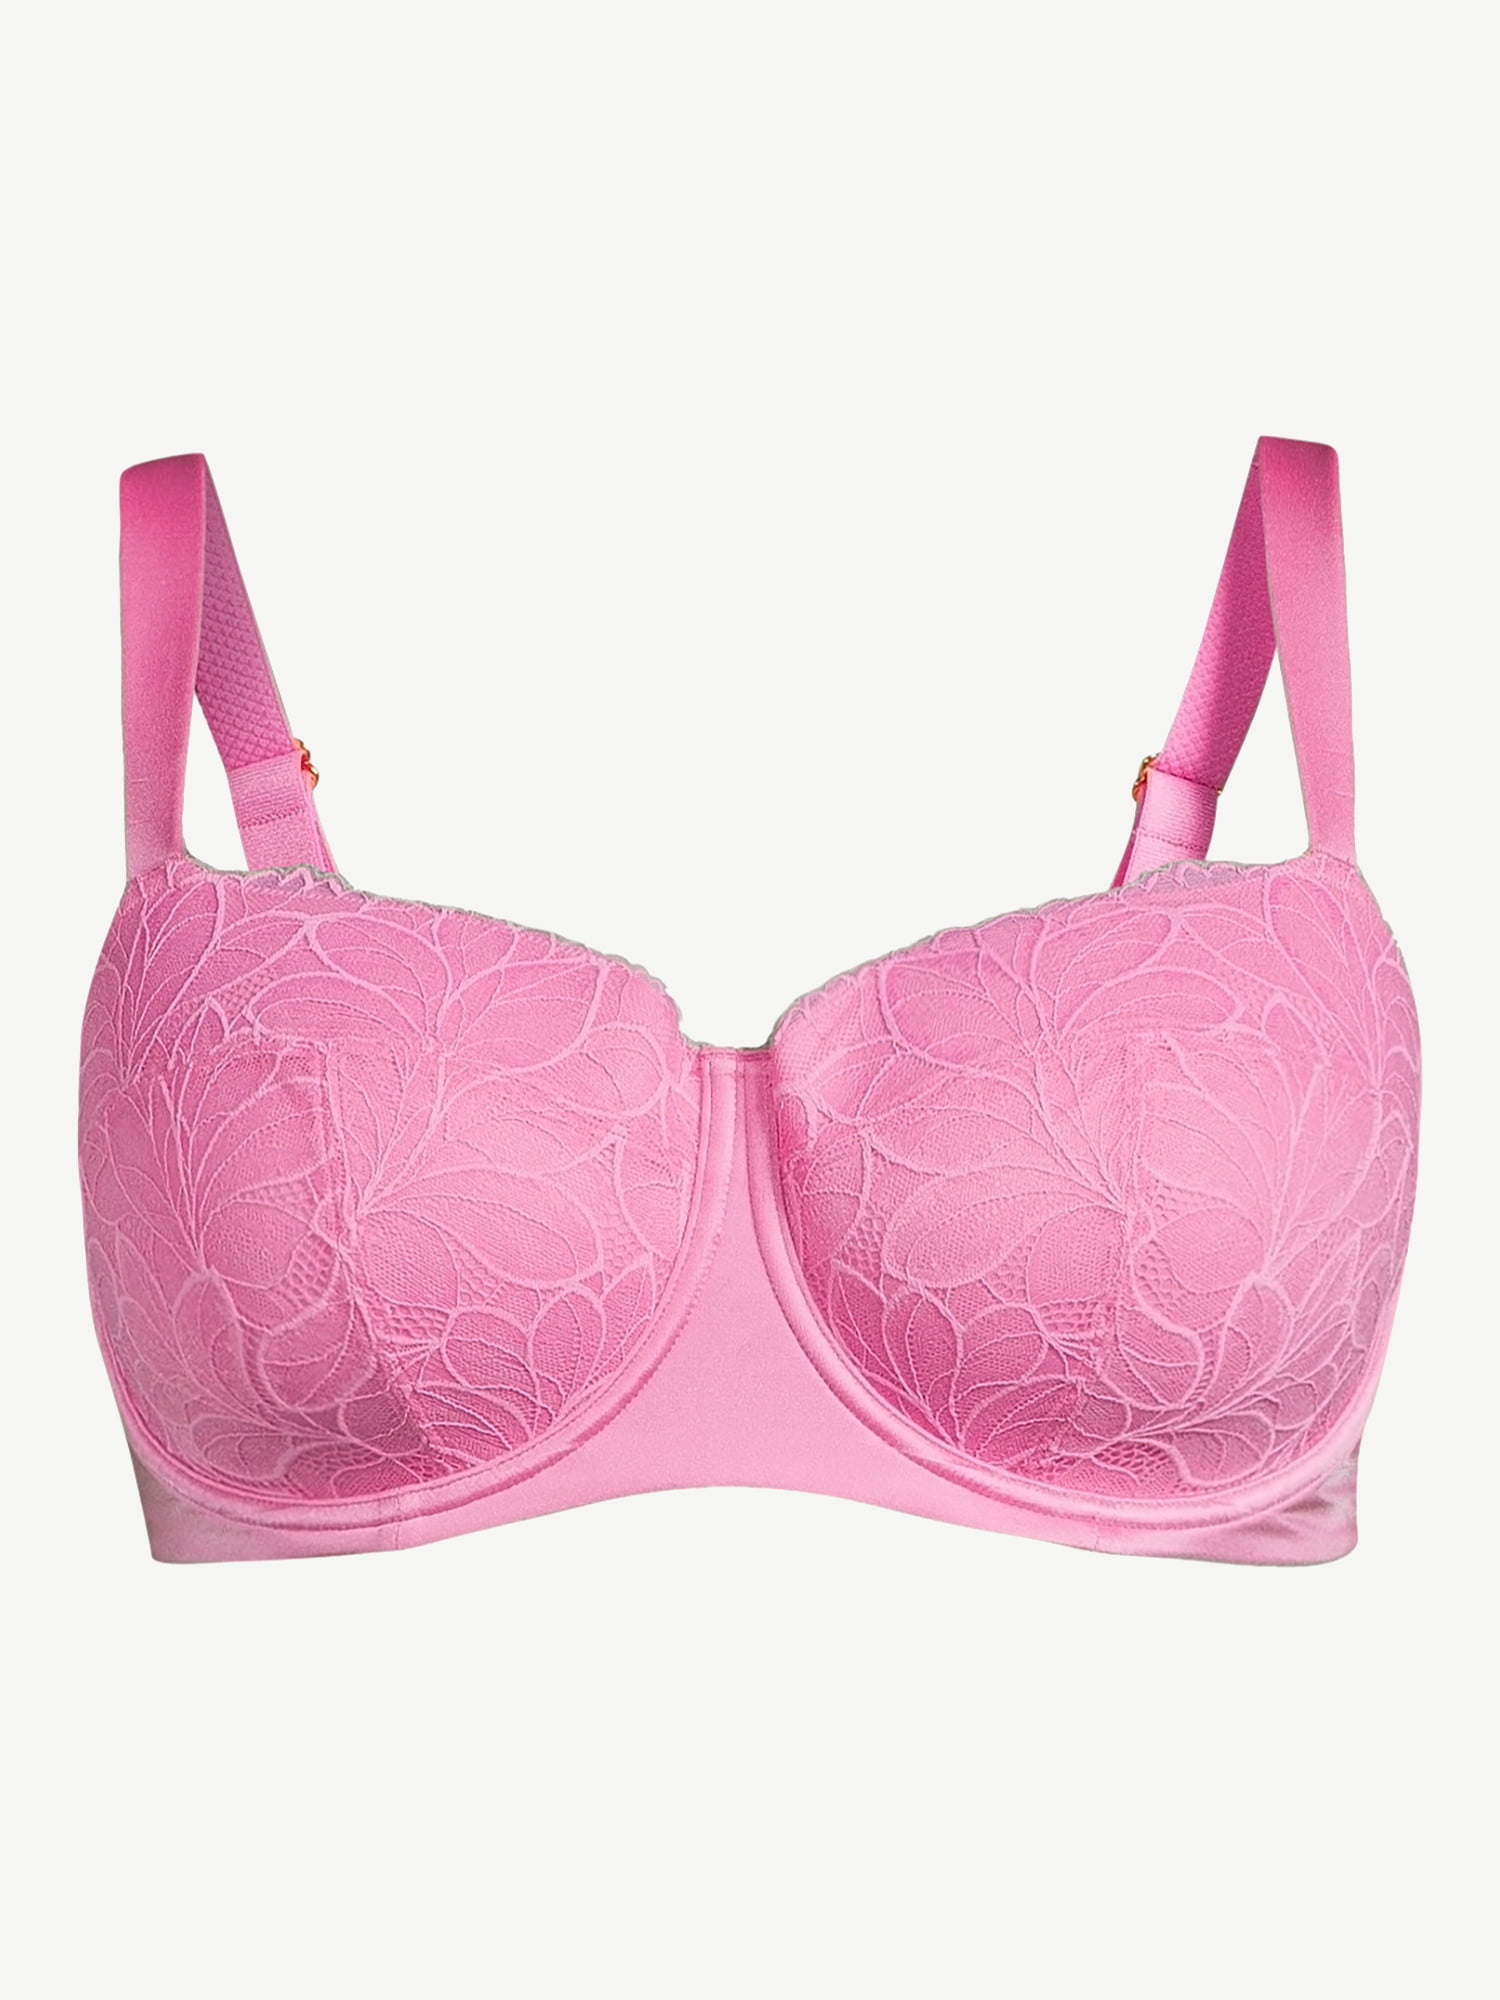 Edendiva's Ladies Plus Size Bra & Panty Set - Pink, Shop Today. Get it  Tomorrow!